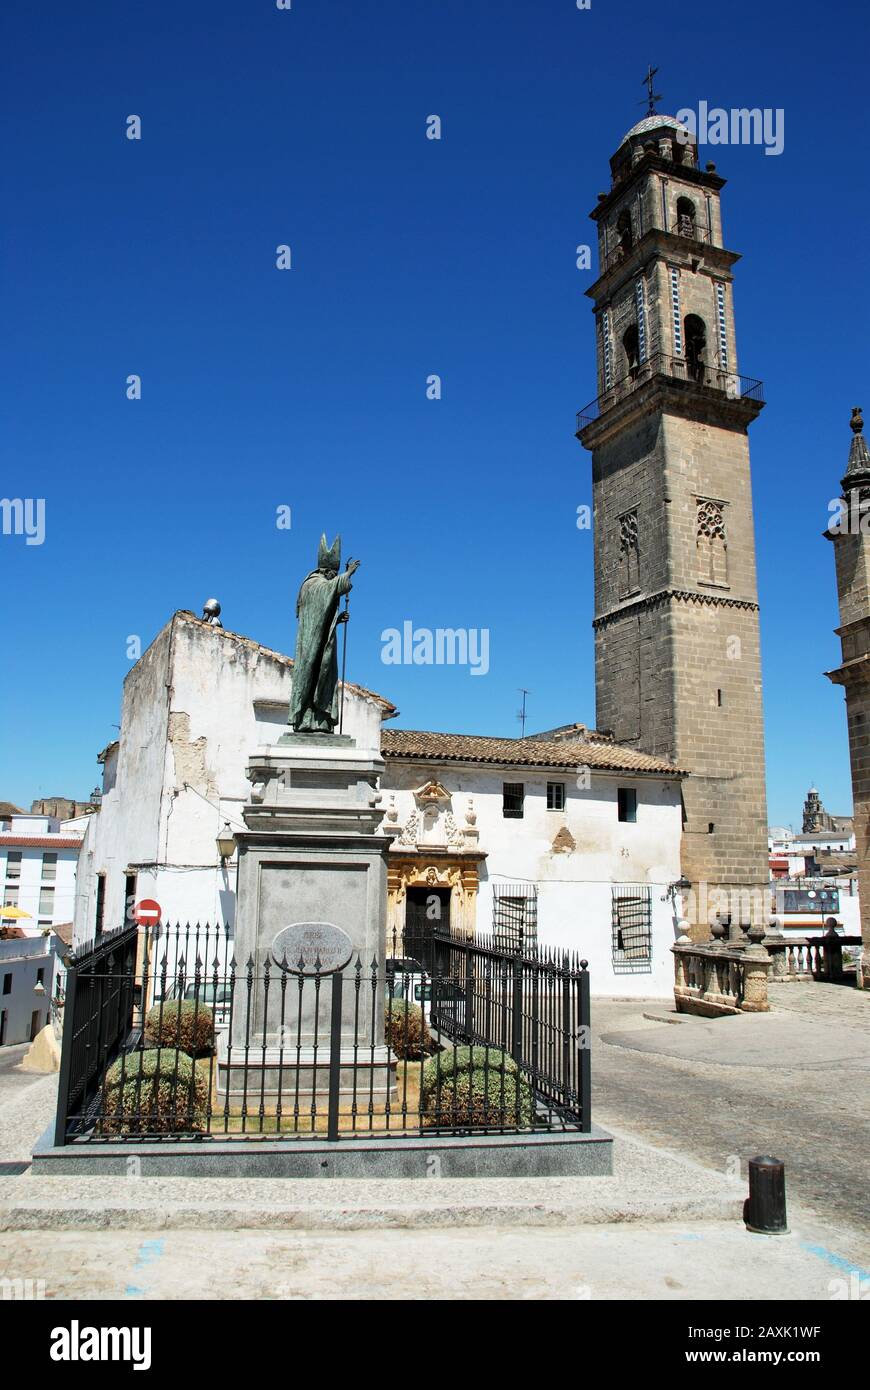 Palacio del marques de Bertemati et statue de Juan Pablo II sur la Plaza de la Encarnacion, Jerez de la Frontera, province de Cadiz; Andalousie, Espagne Banque D'Images